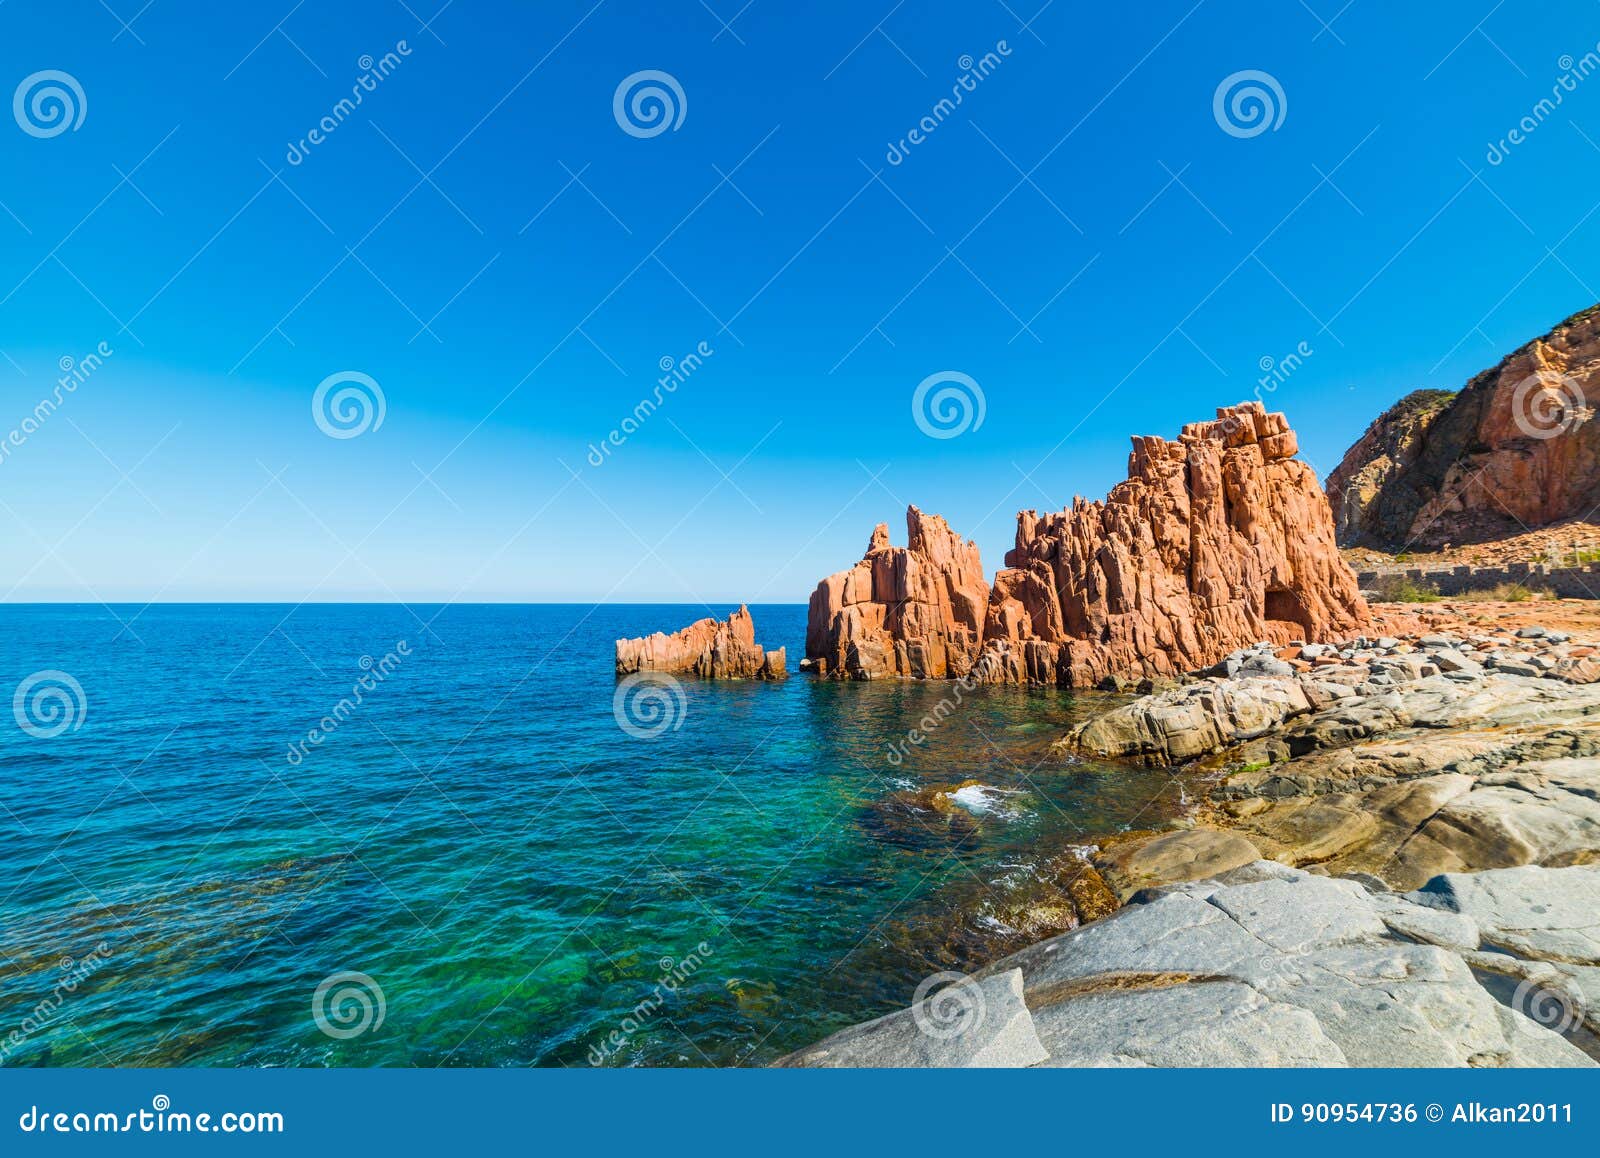 rocce rosse shore in sardinia